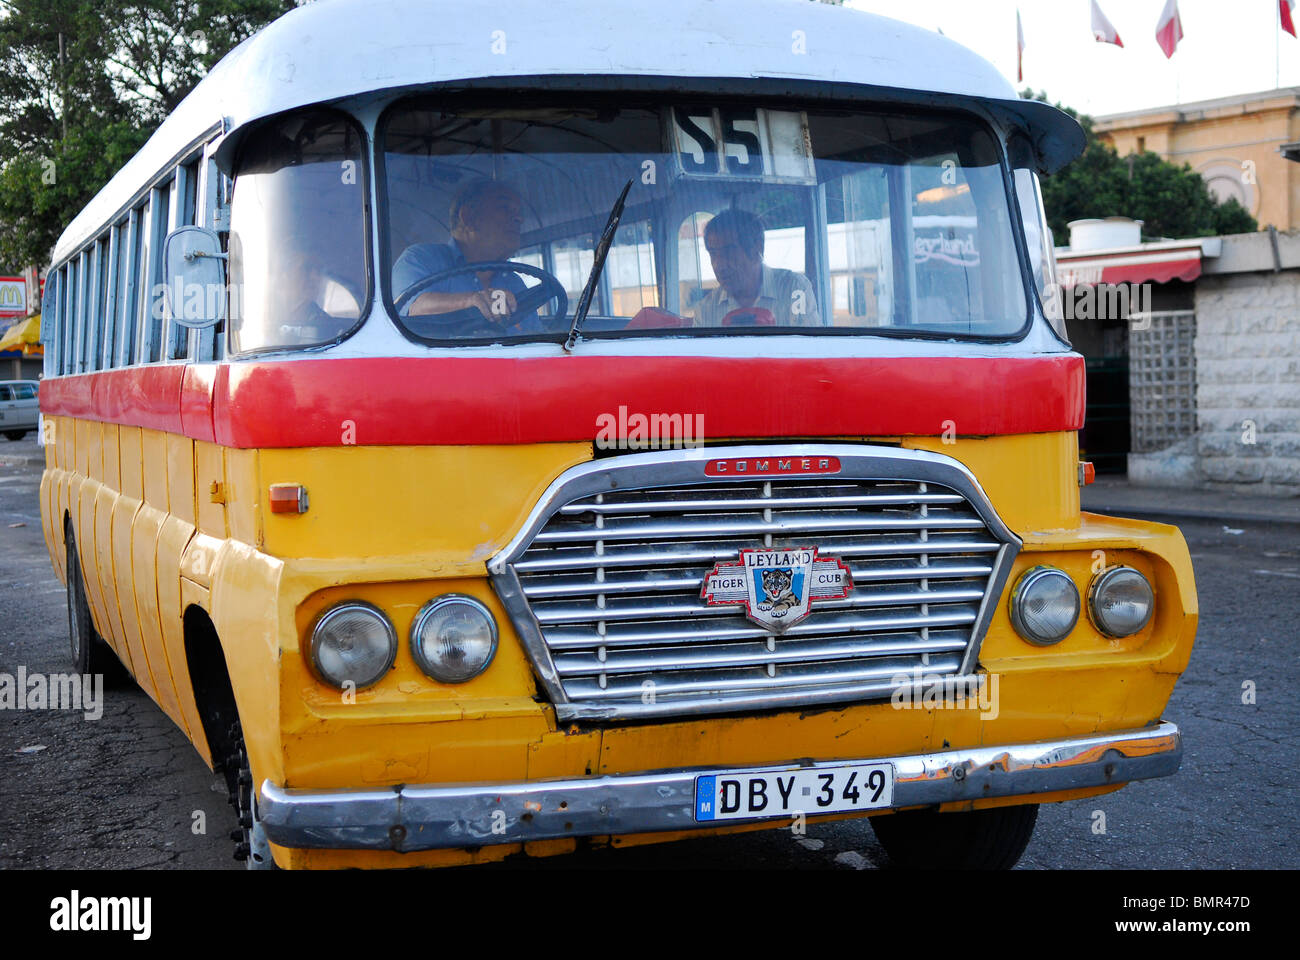 Public transport bus in Valletta, Malta. Stock Photo